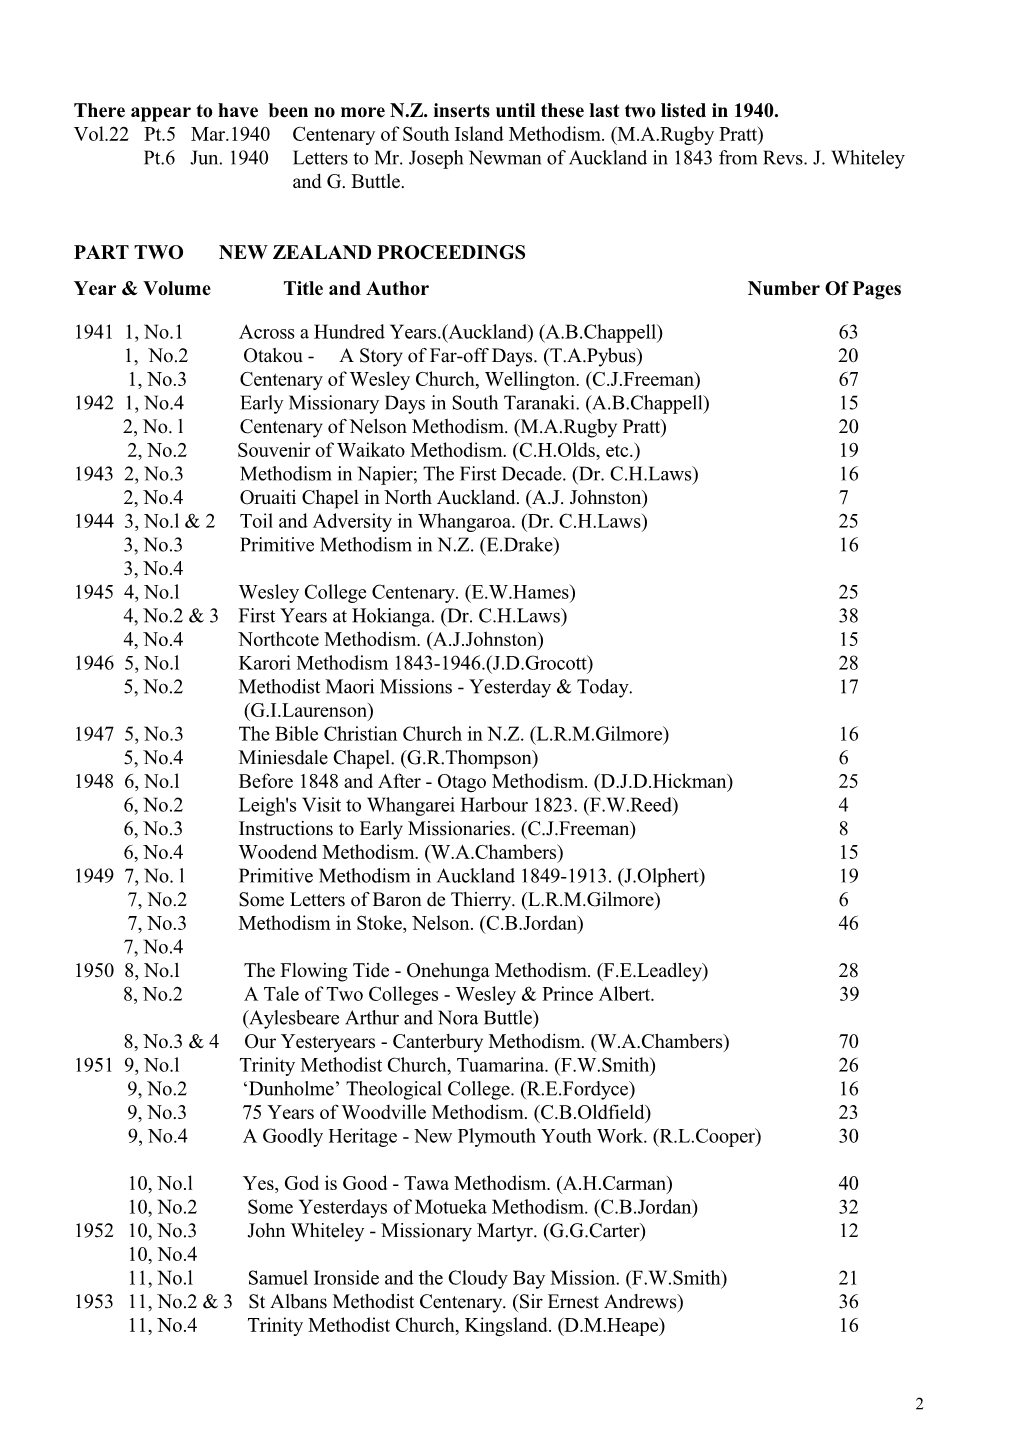 A List of Whs(Nz) Proceedings